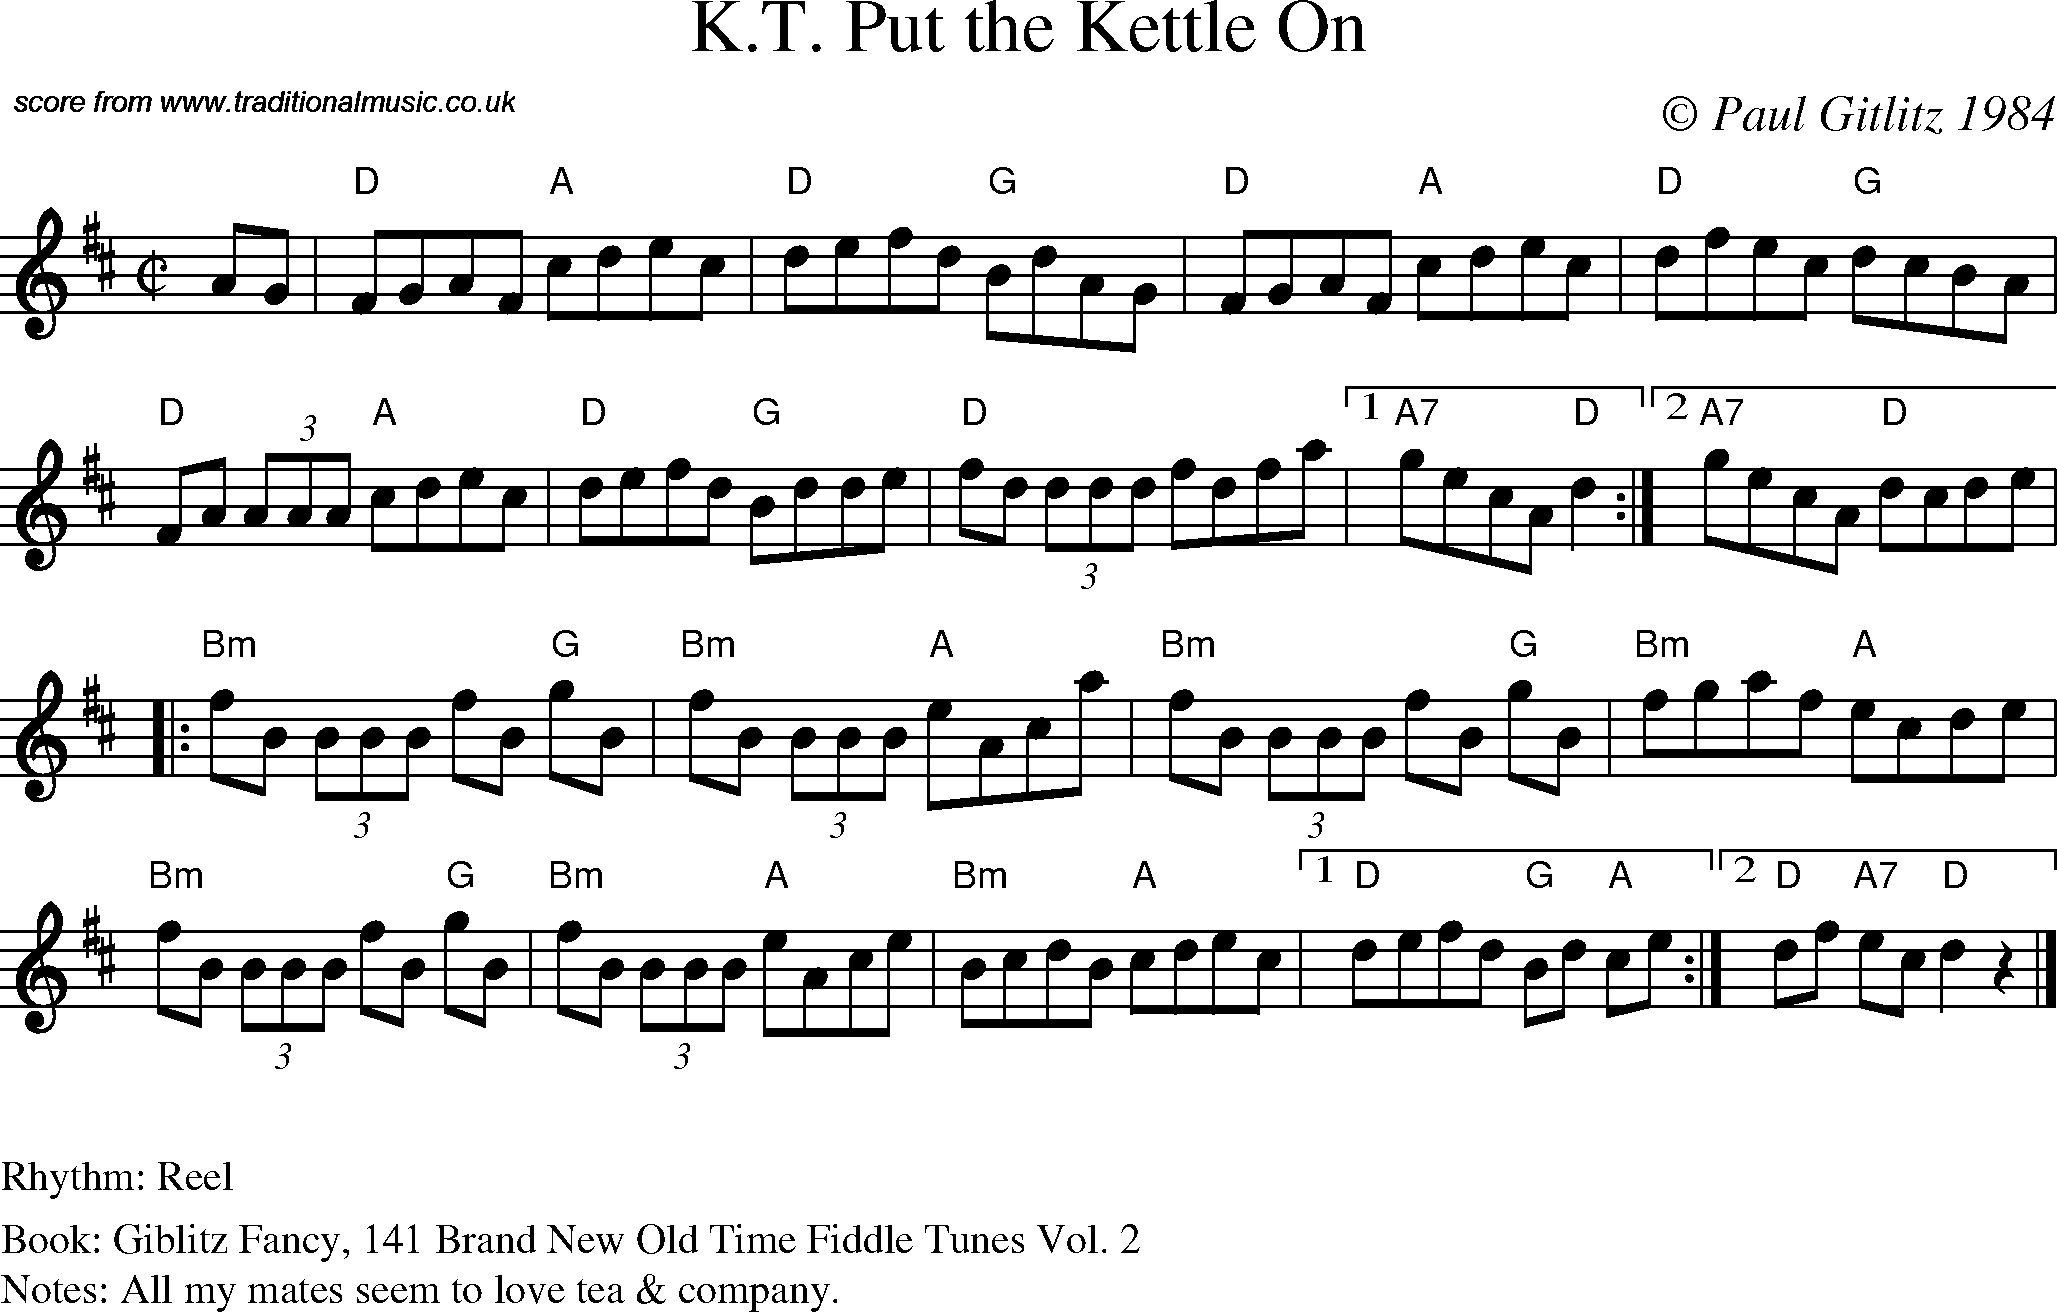 Sheet Music Score for Reel - K.T. Put the Kettle On